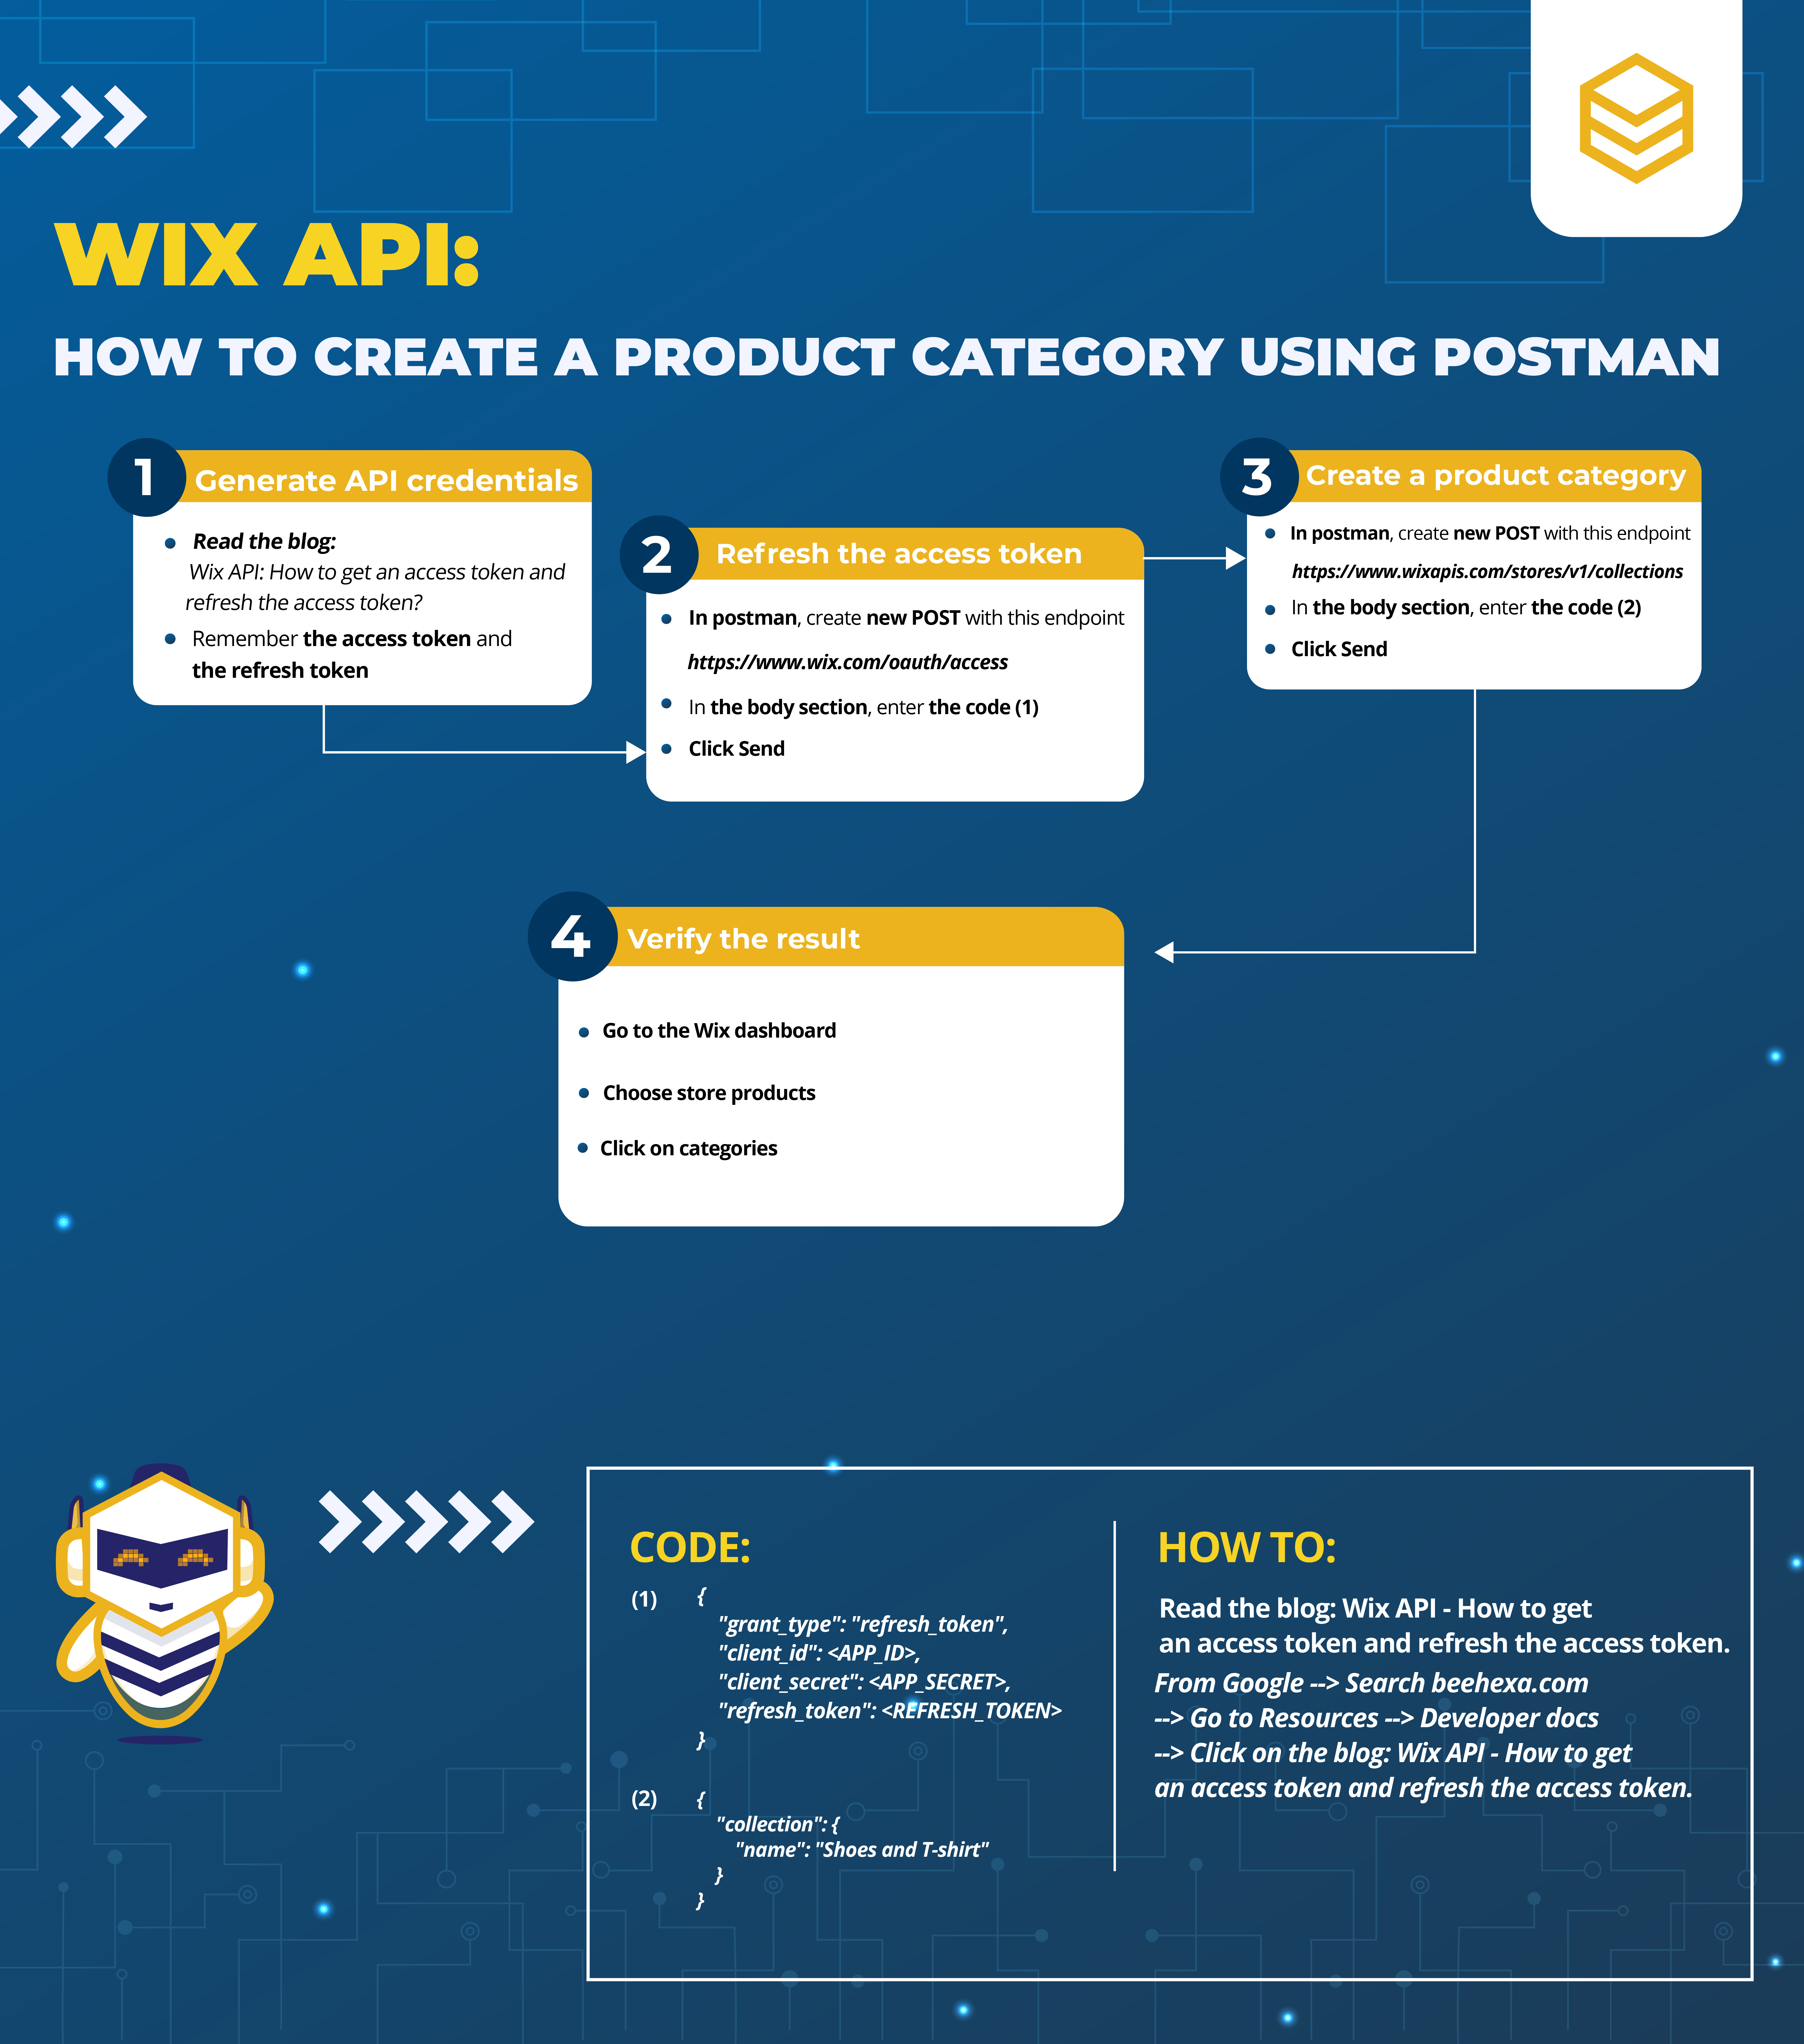 beehexa infor wix api how to create a product category using postman 01